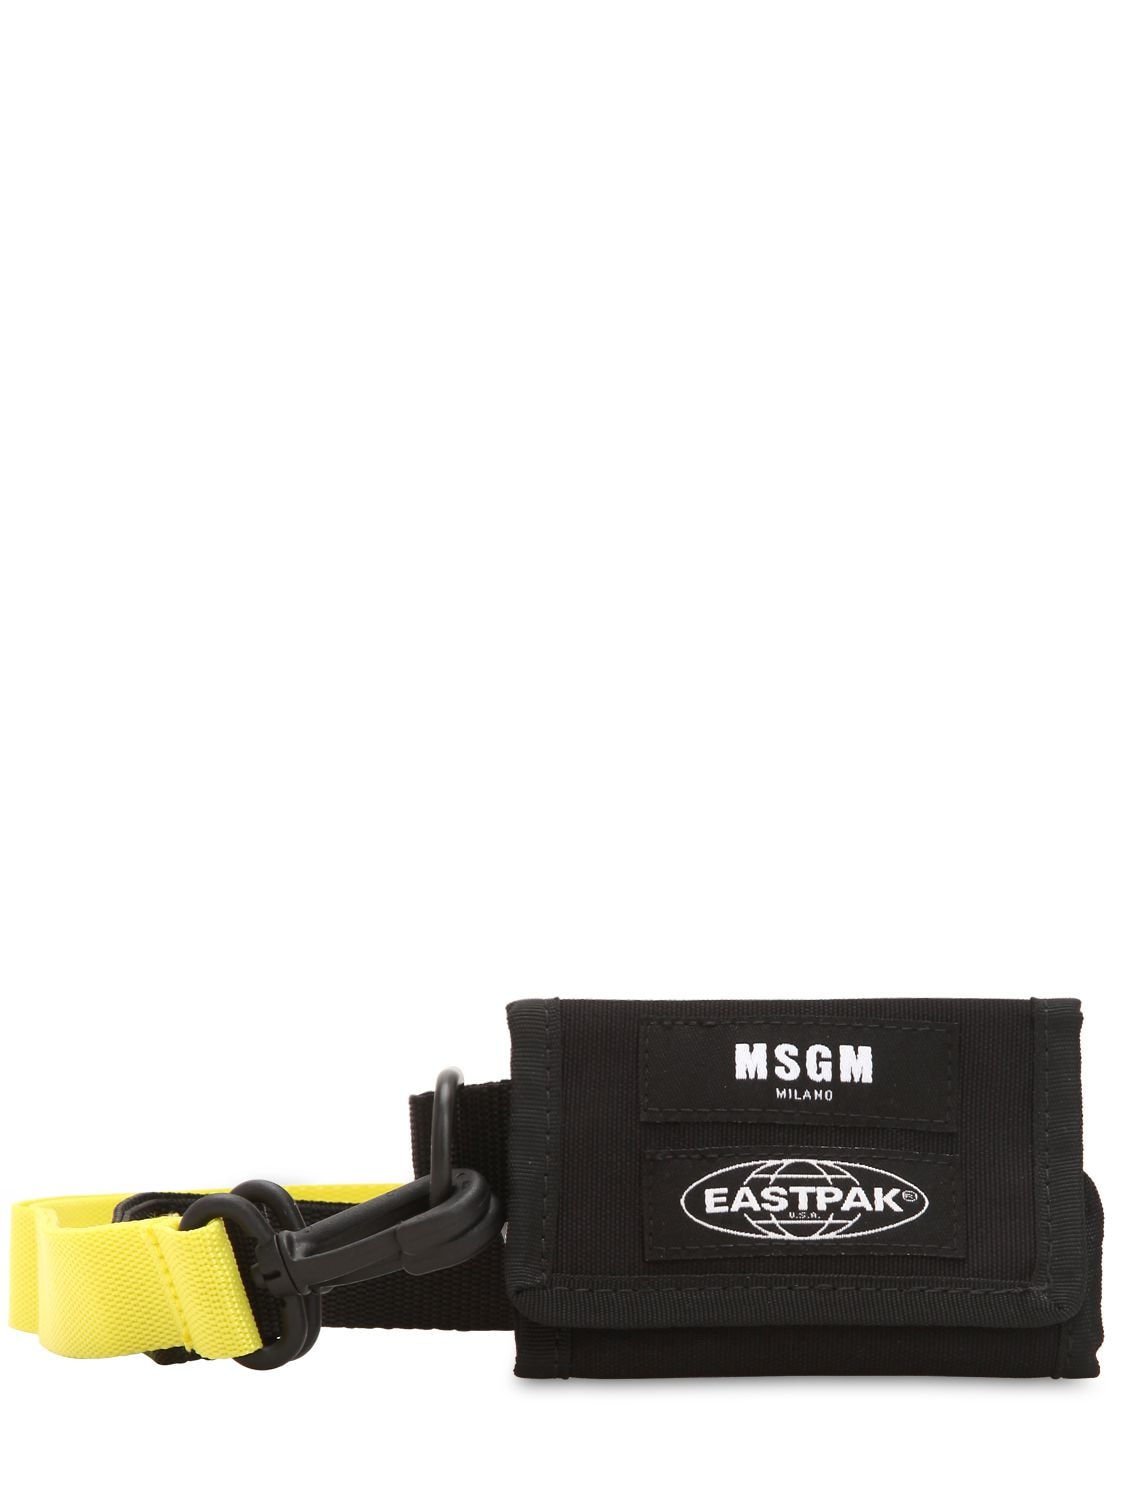 Eastpak By Msgm "eastpak"尼龙钥匙链 In Black